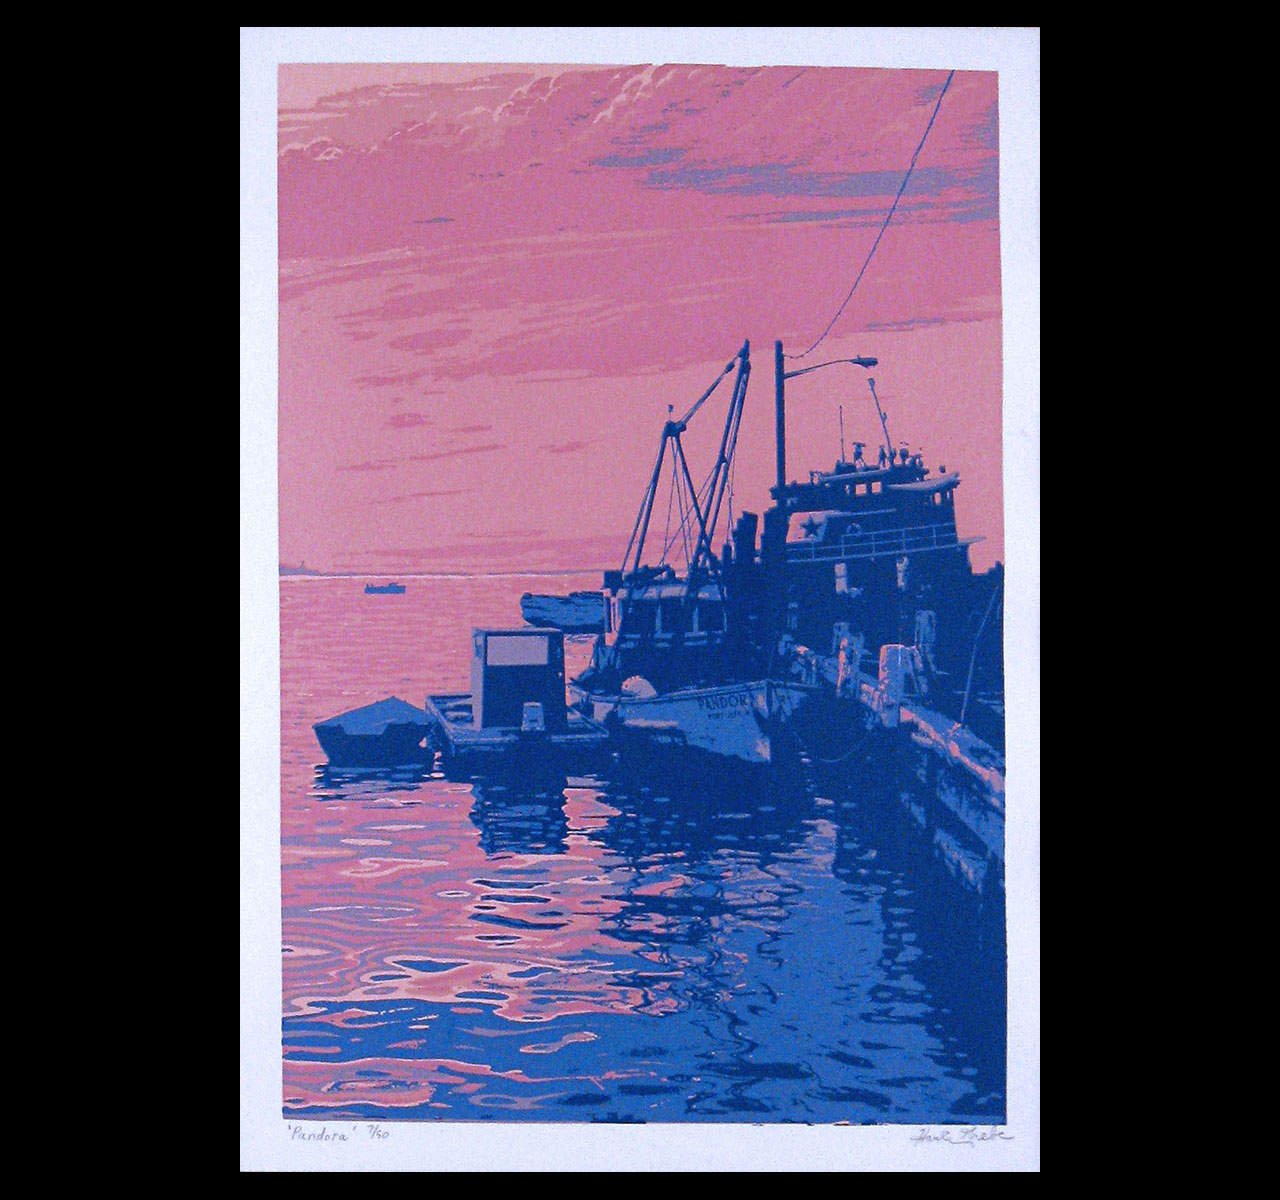 Pandora Port Jefferson Long Island photo silkscreen print by Hank Grebe